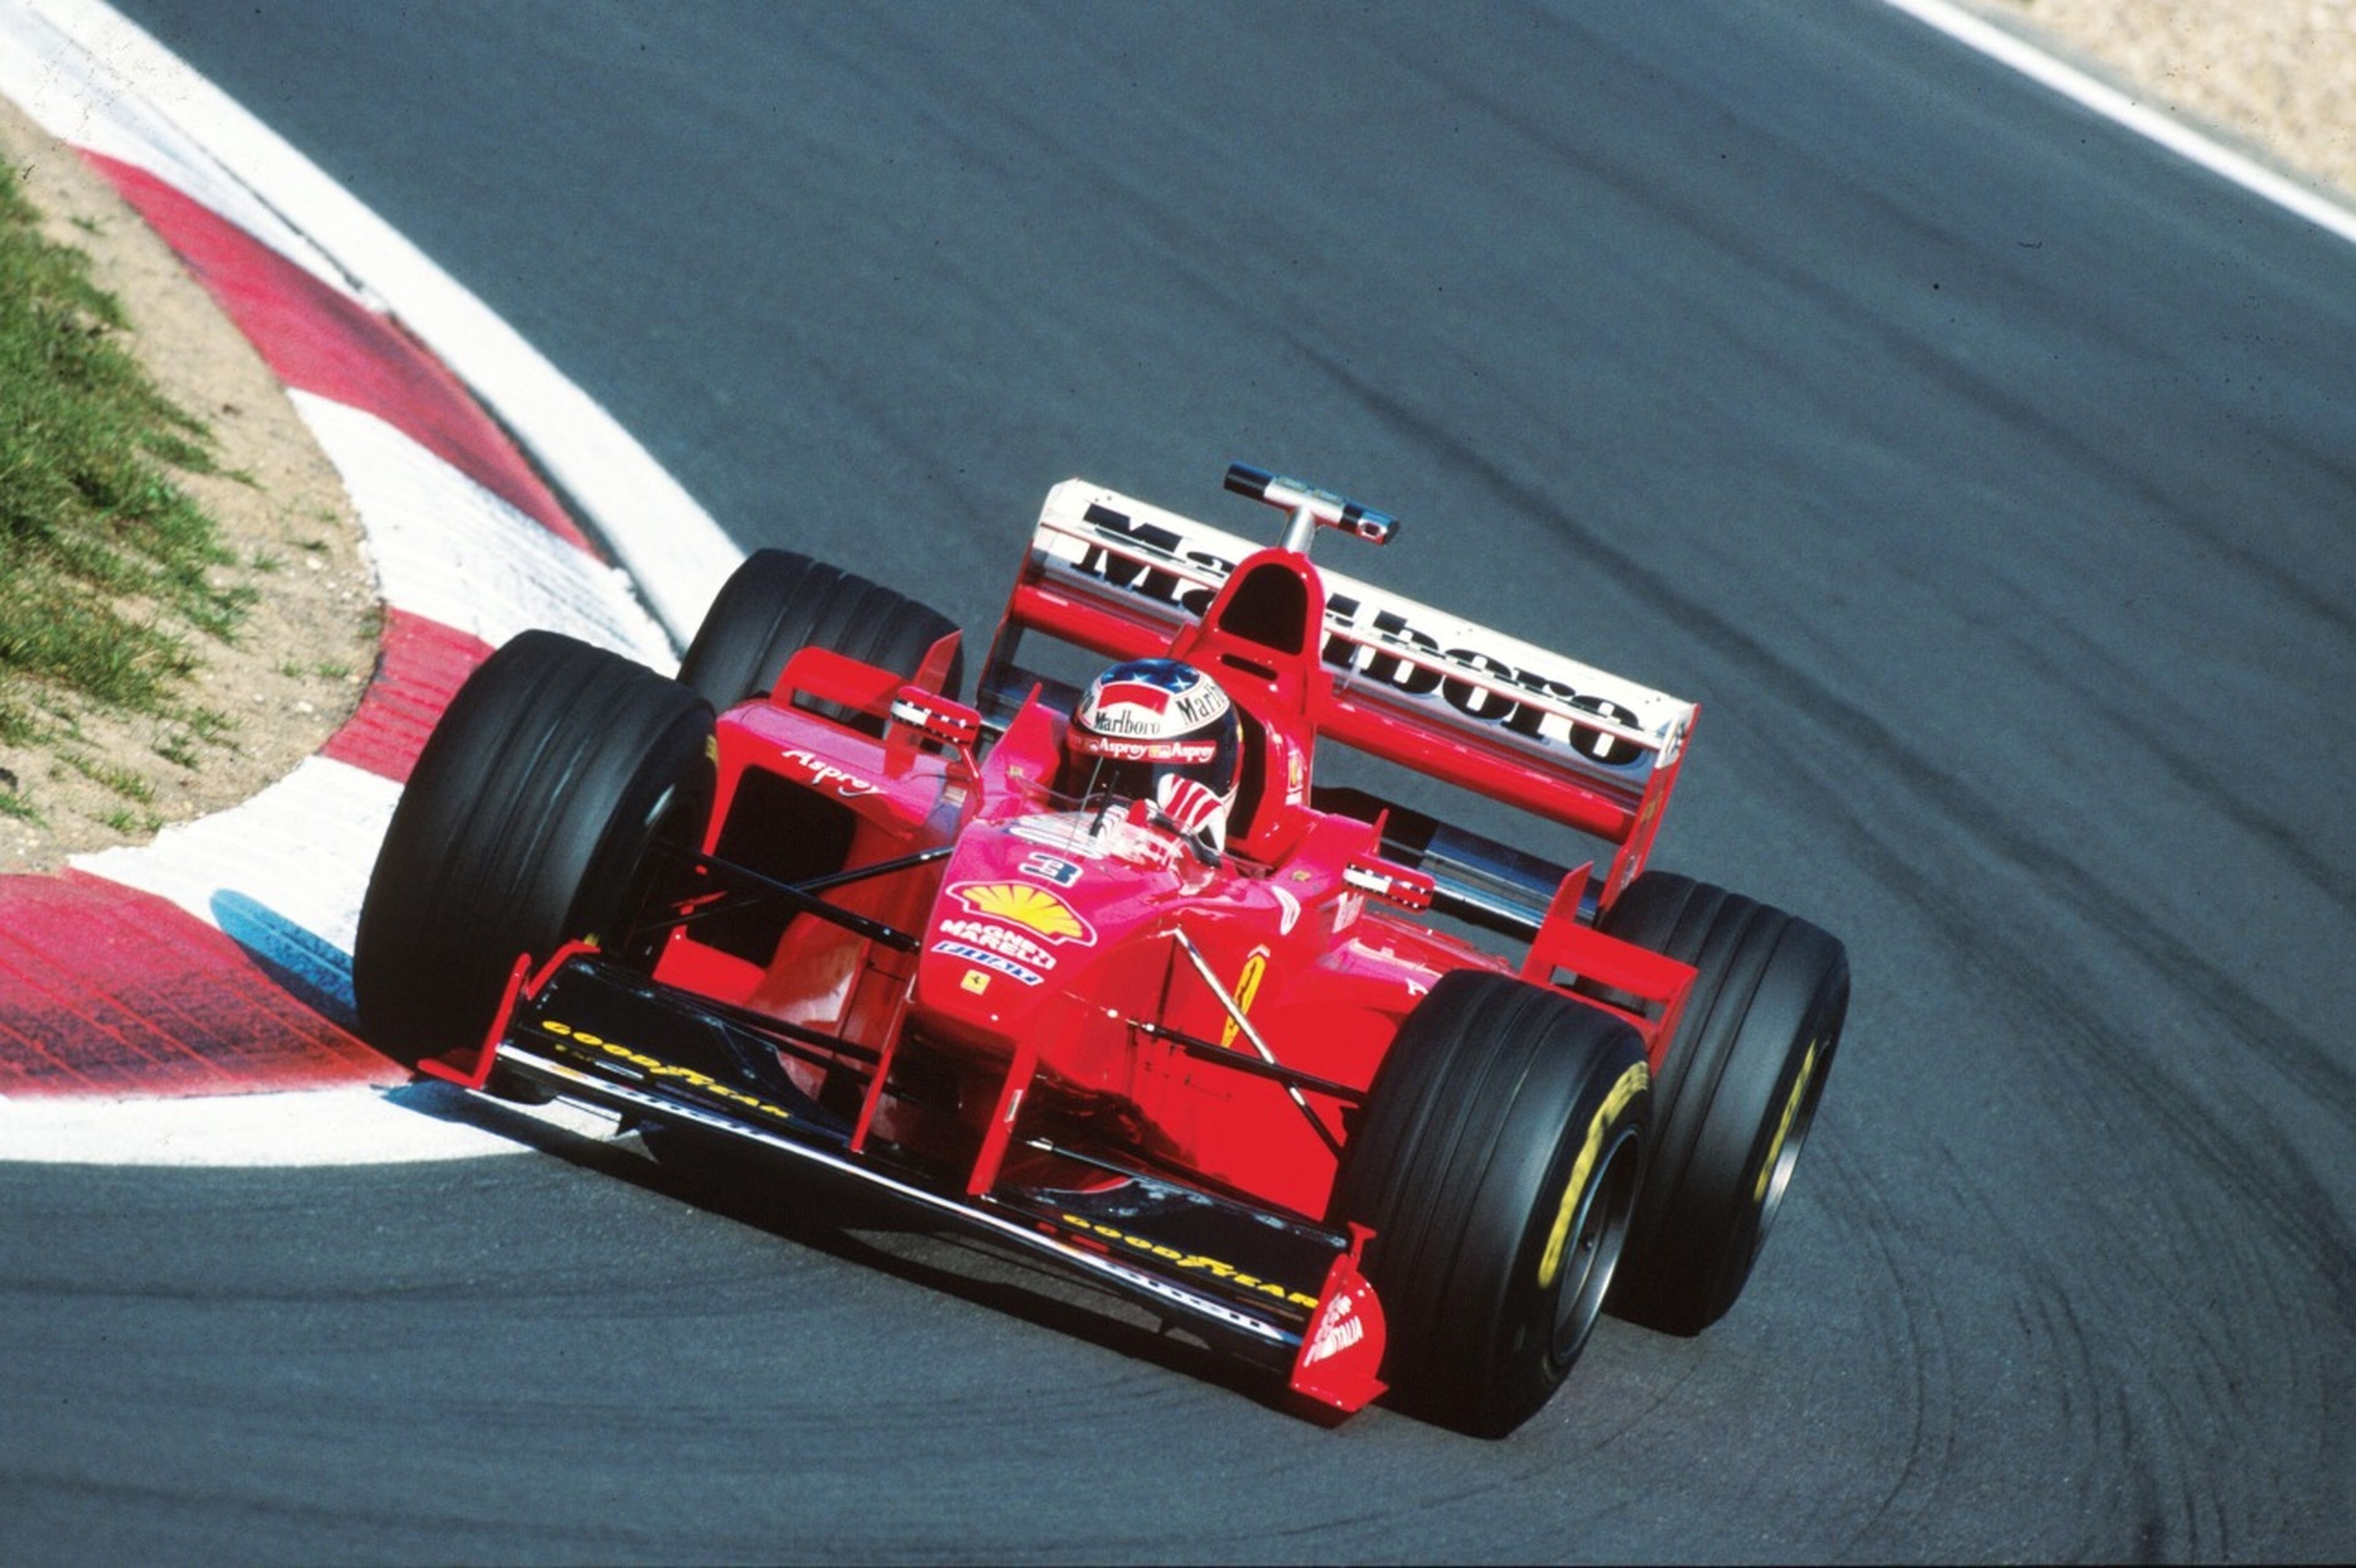 Ferrari F300 Schumacher